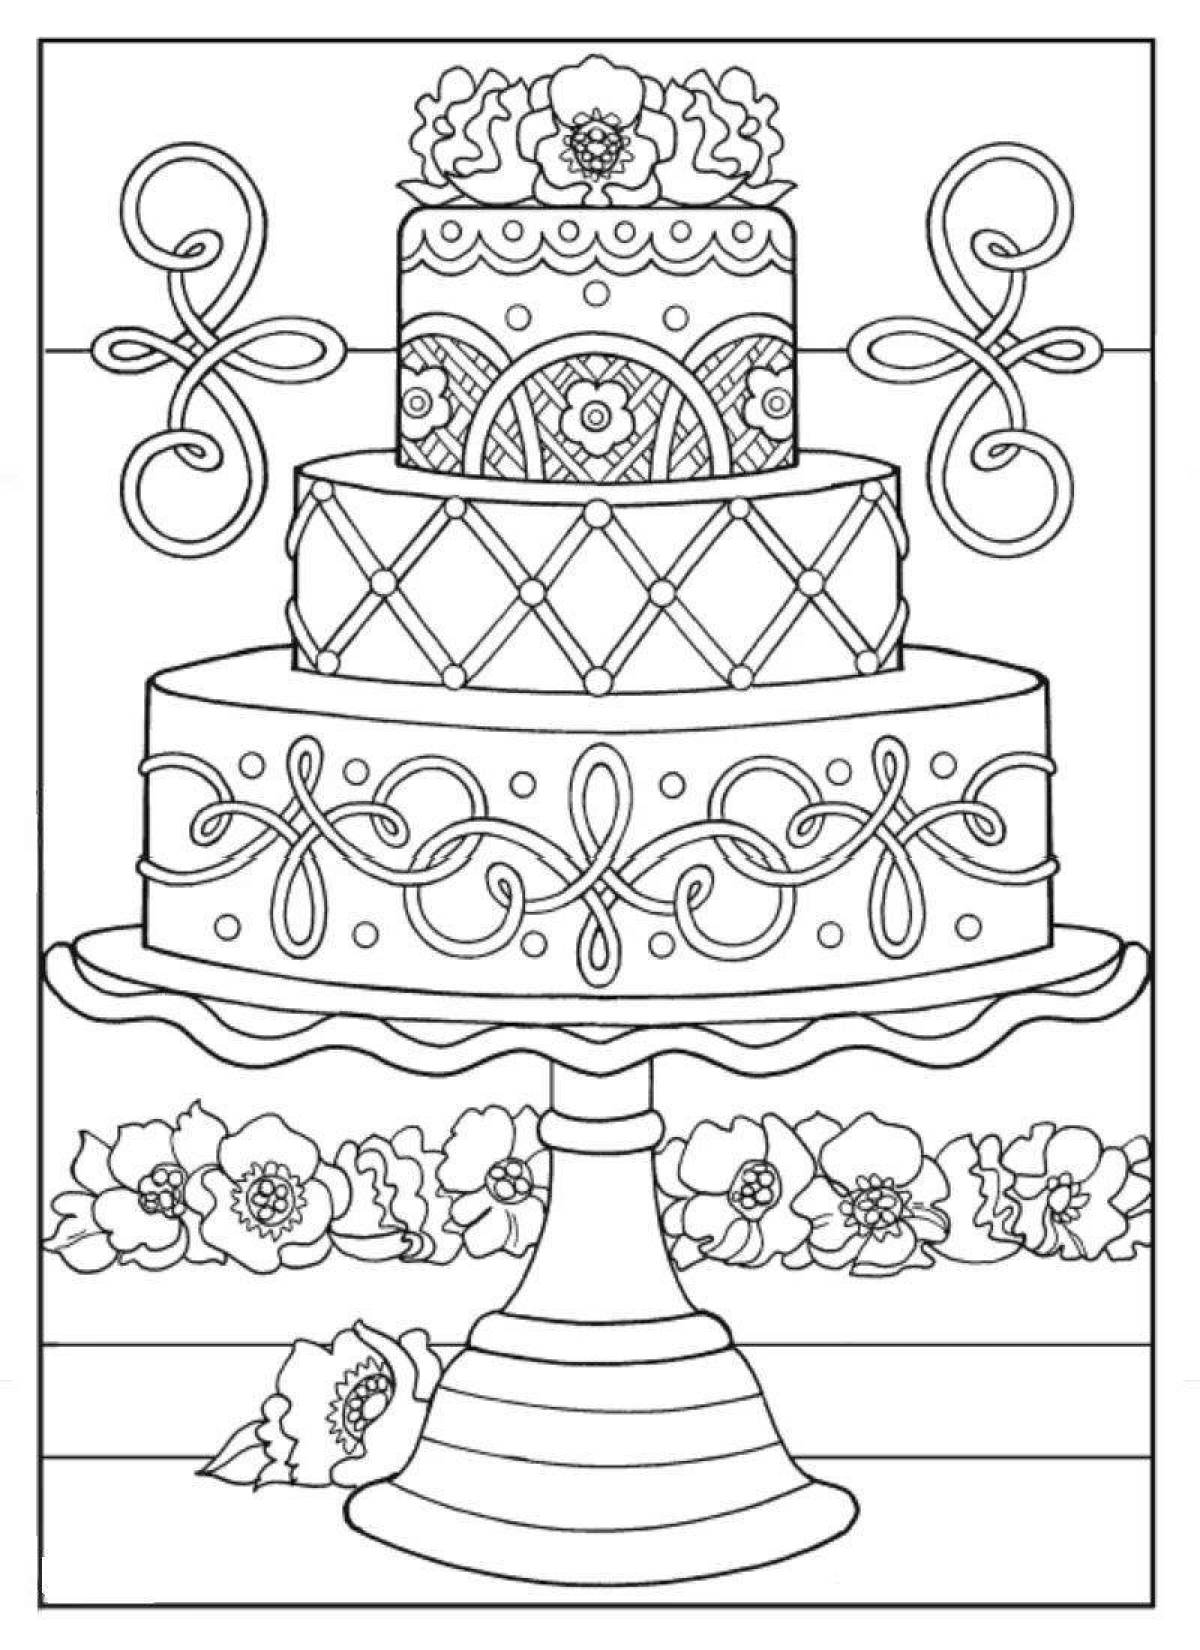 Attractive beautiful cake coloring book